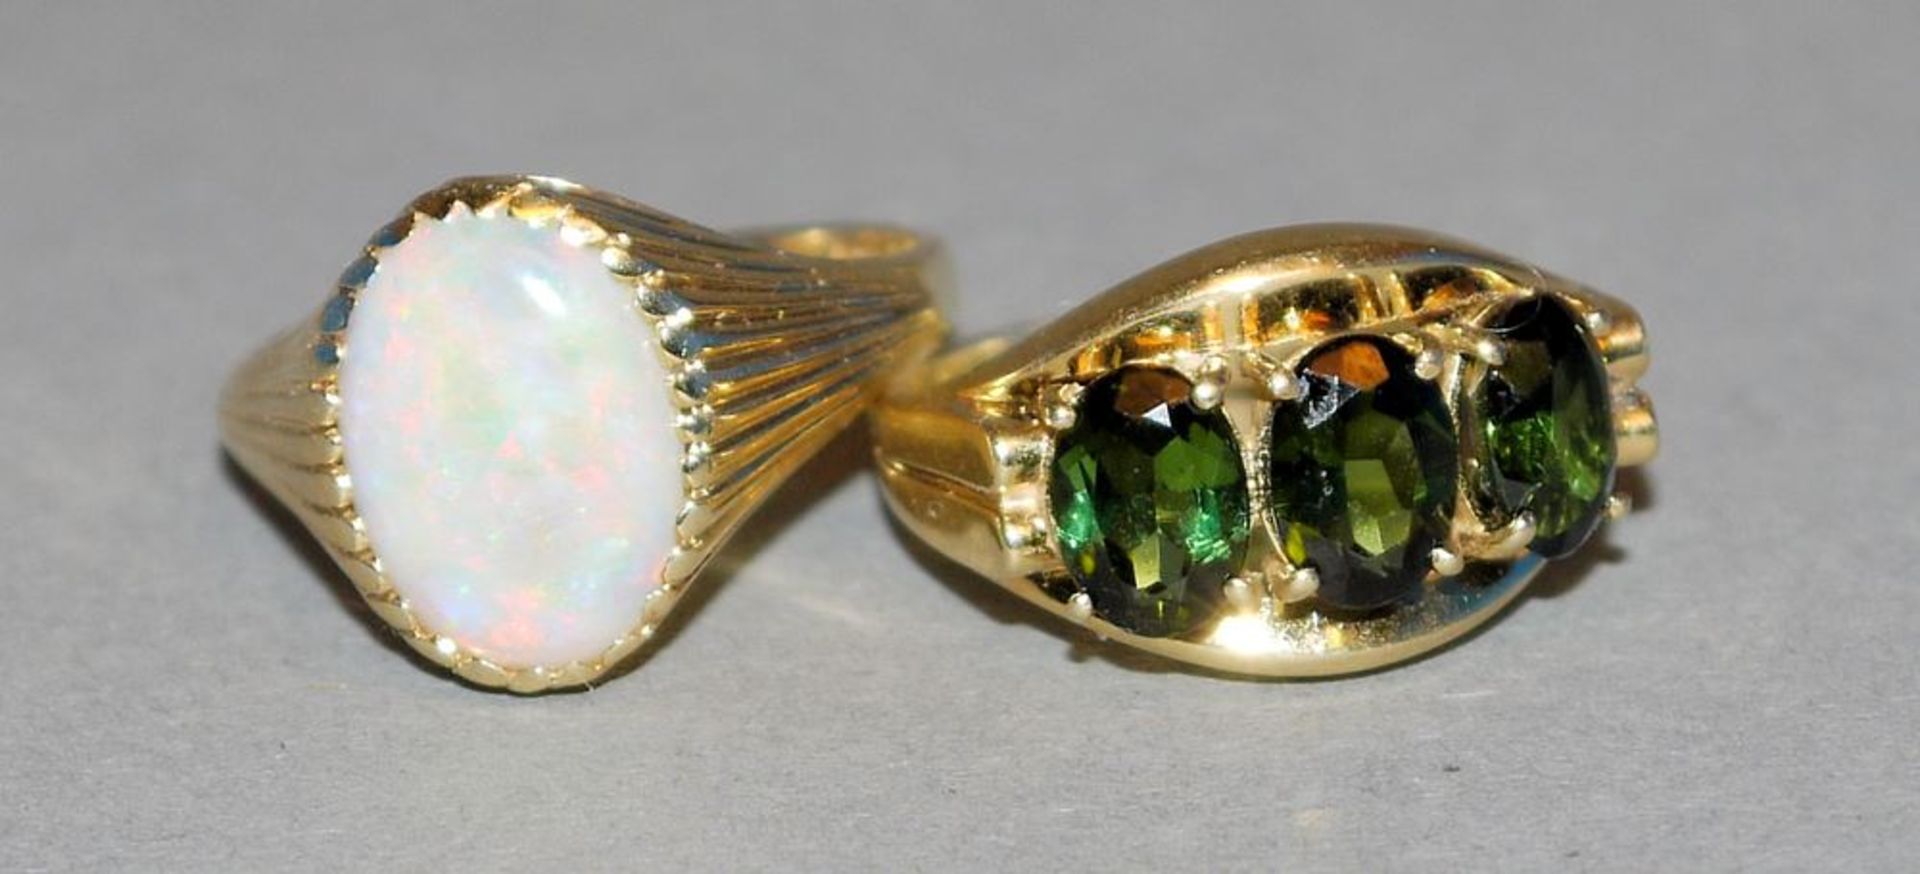 Opal-Ring, Christian Bauer & Turmalin-Ring um 1960, Gold